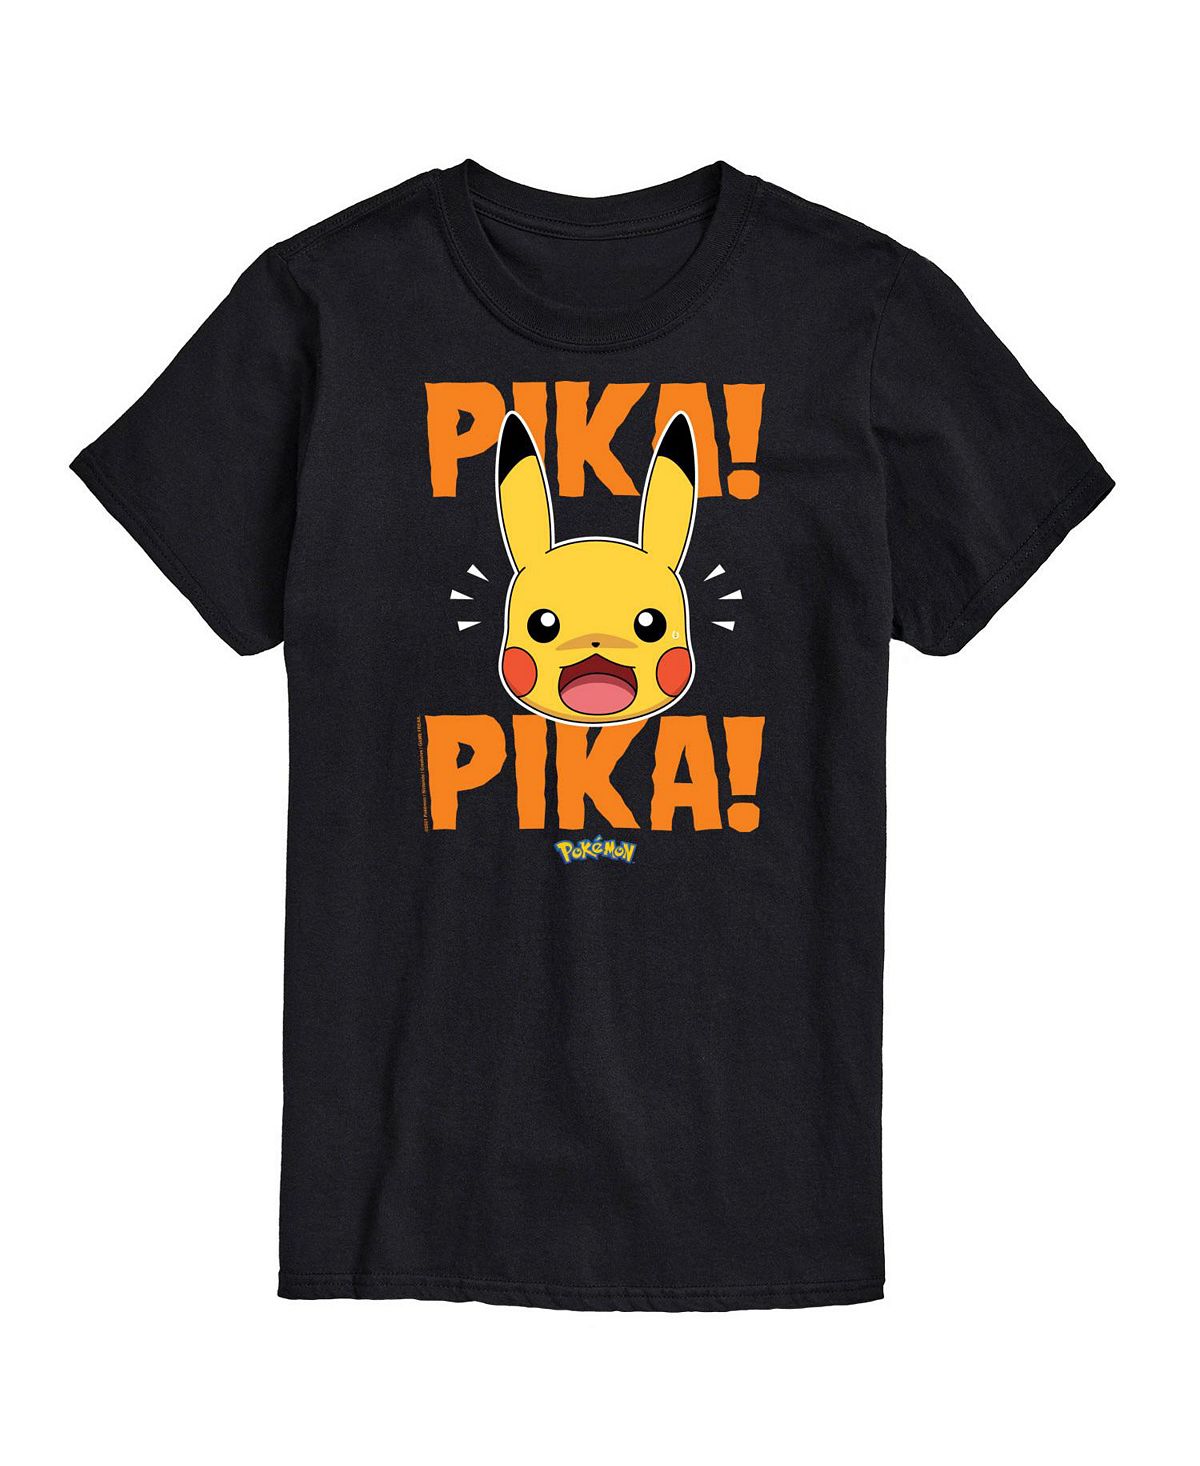 Мужская футболка с короткими рукавами pokemon pika pika AIRWAVES, черный набор pokemon футболка obstagoon punk серая m стикерпак pika 2